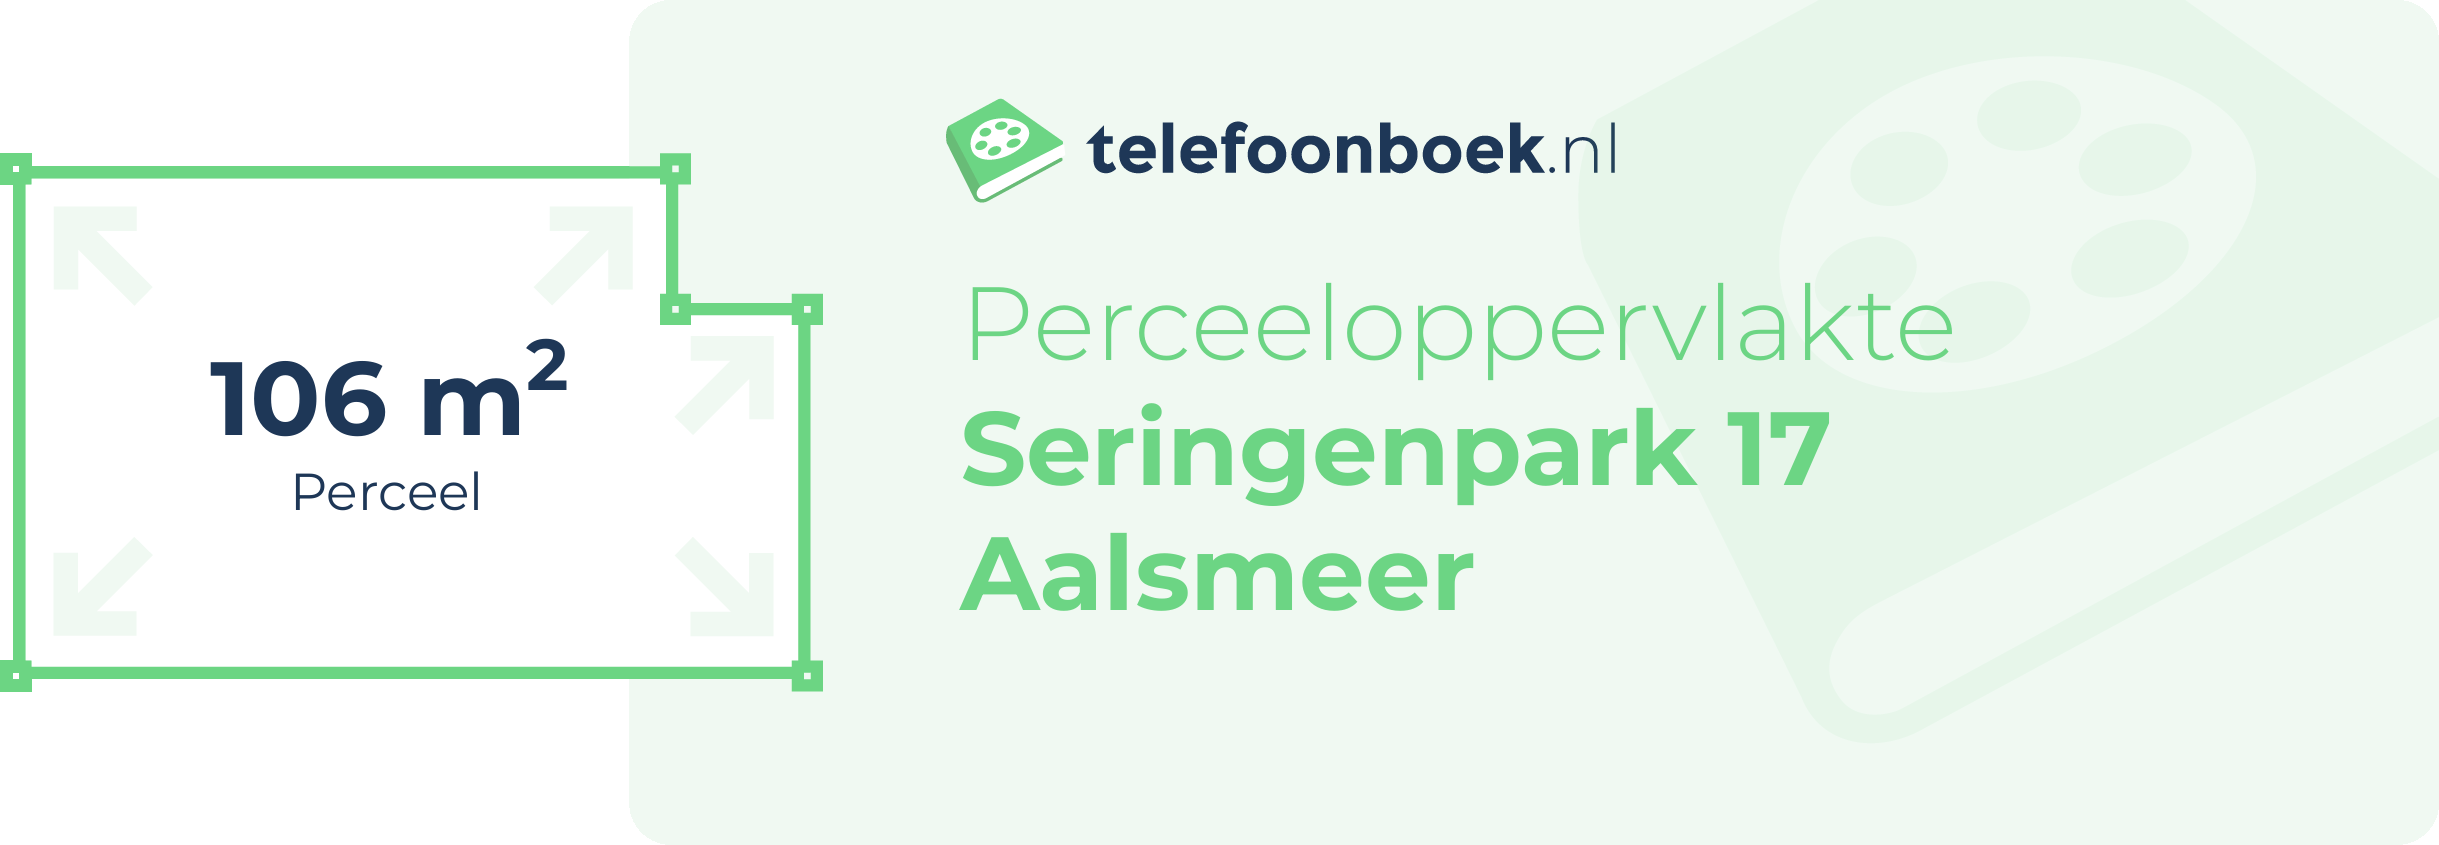 Perceeloppervlakte Seringenpark 17 Aalsmeer